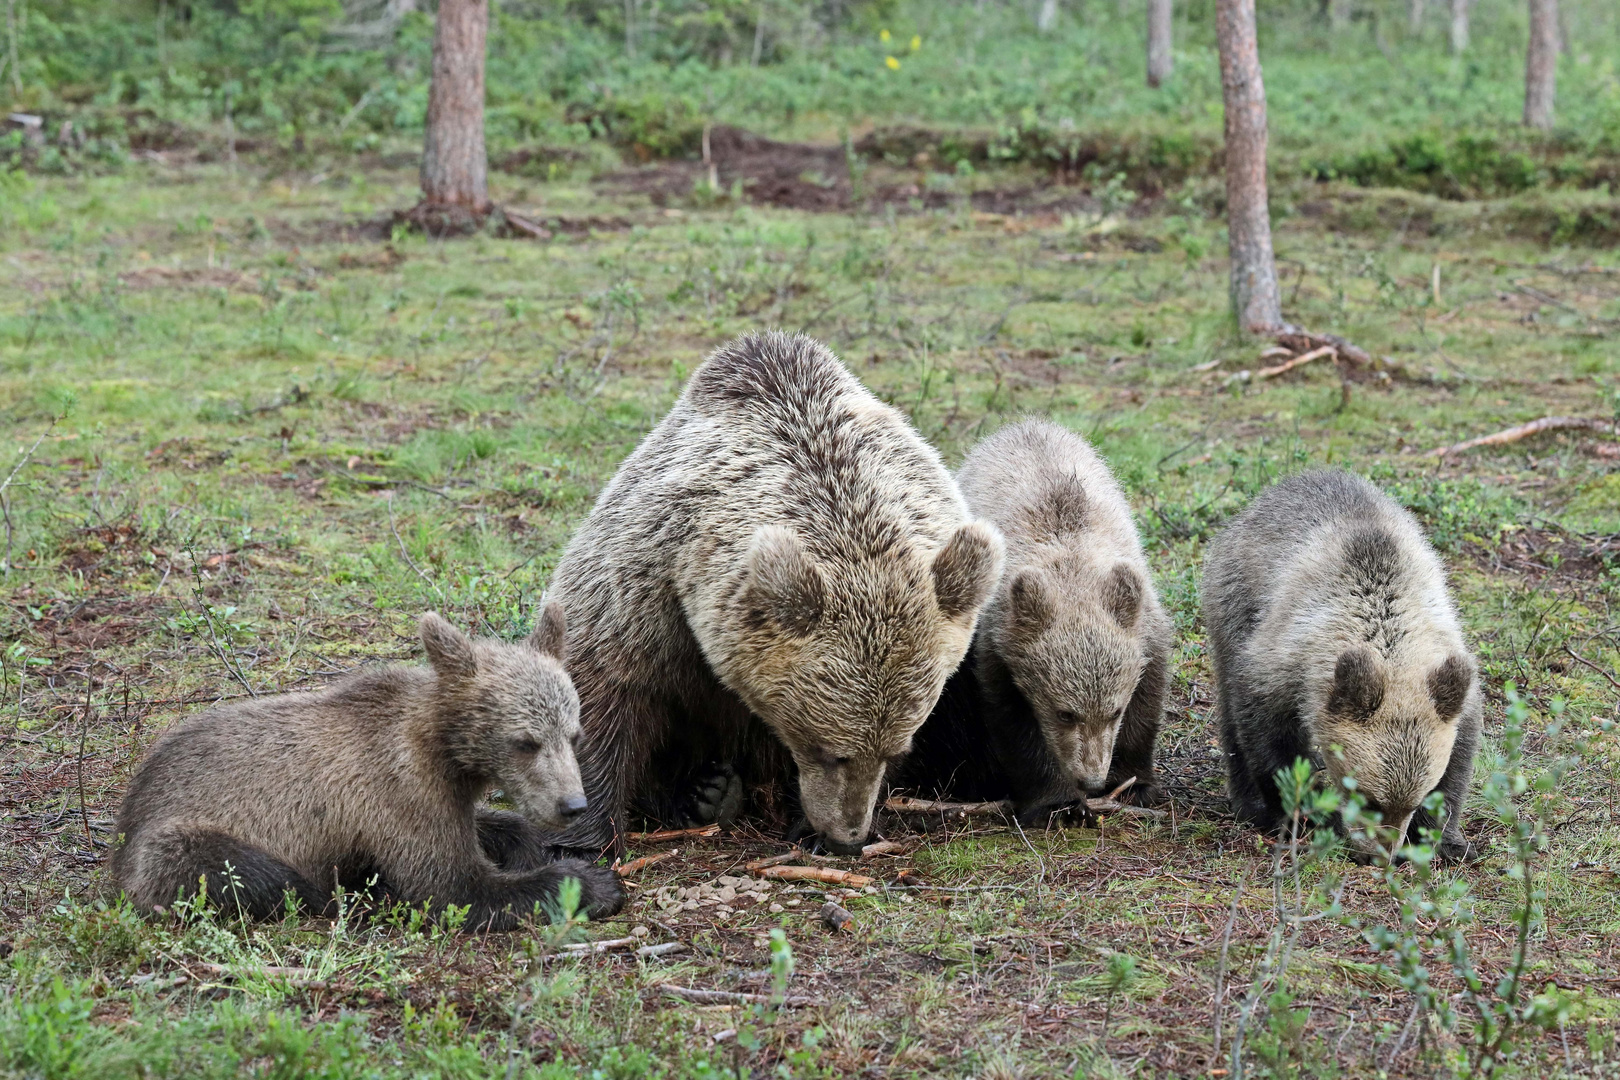 Bärenmutter mit 3 jungen Bären